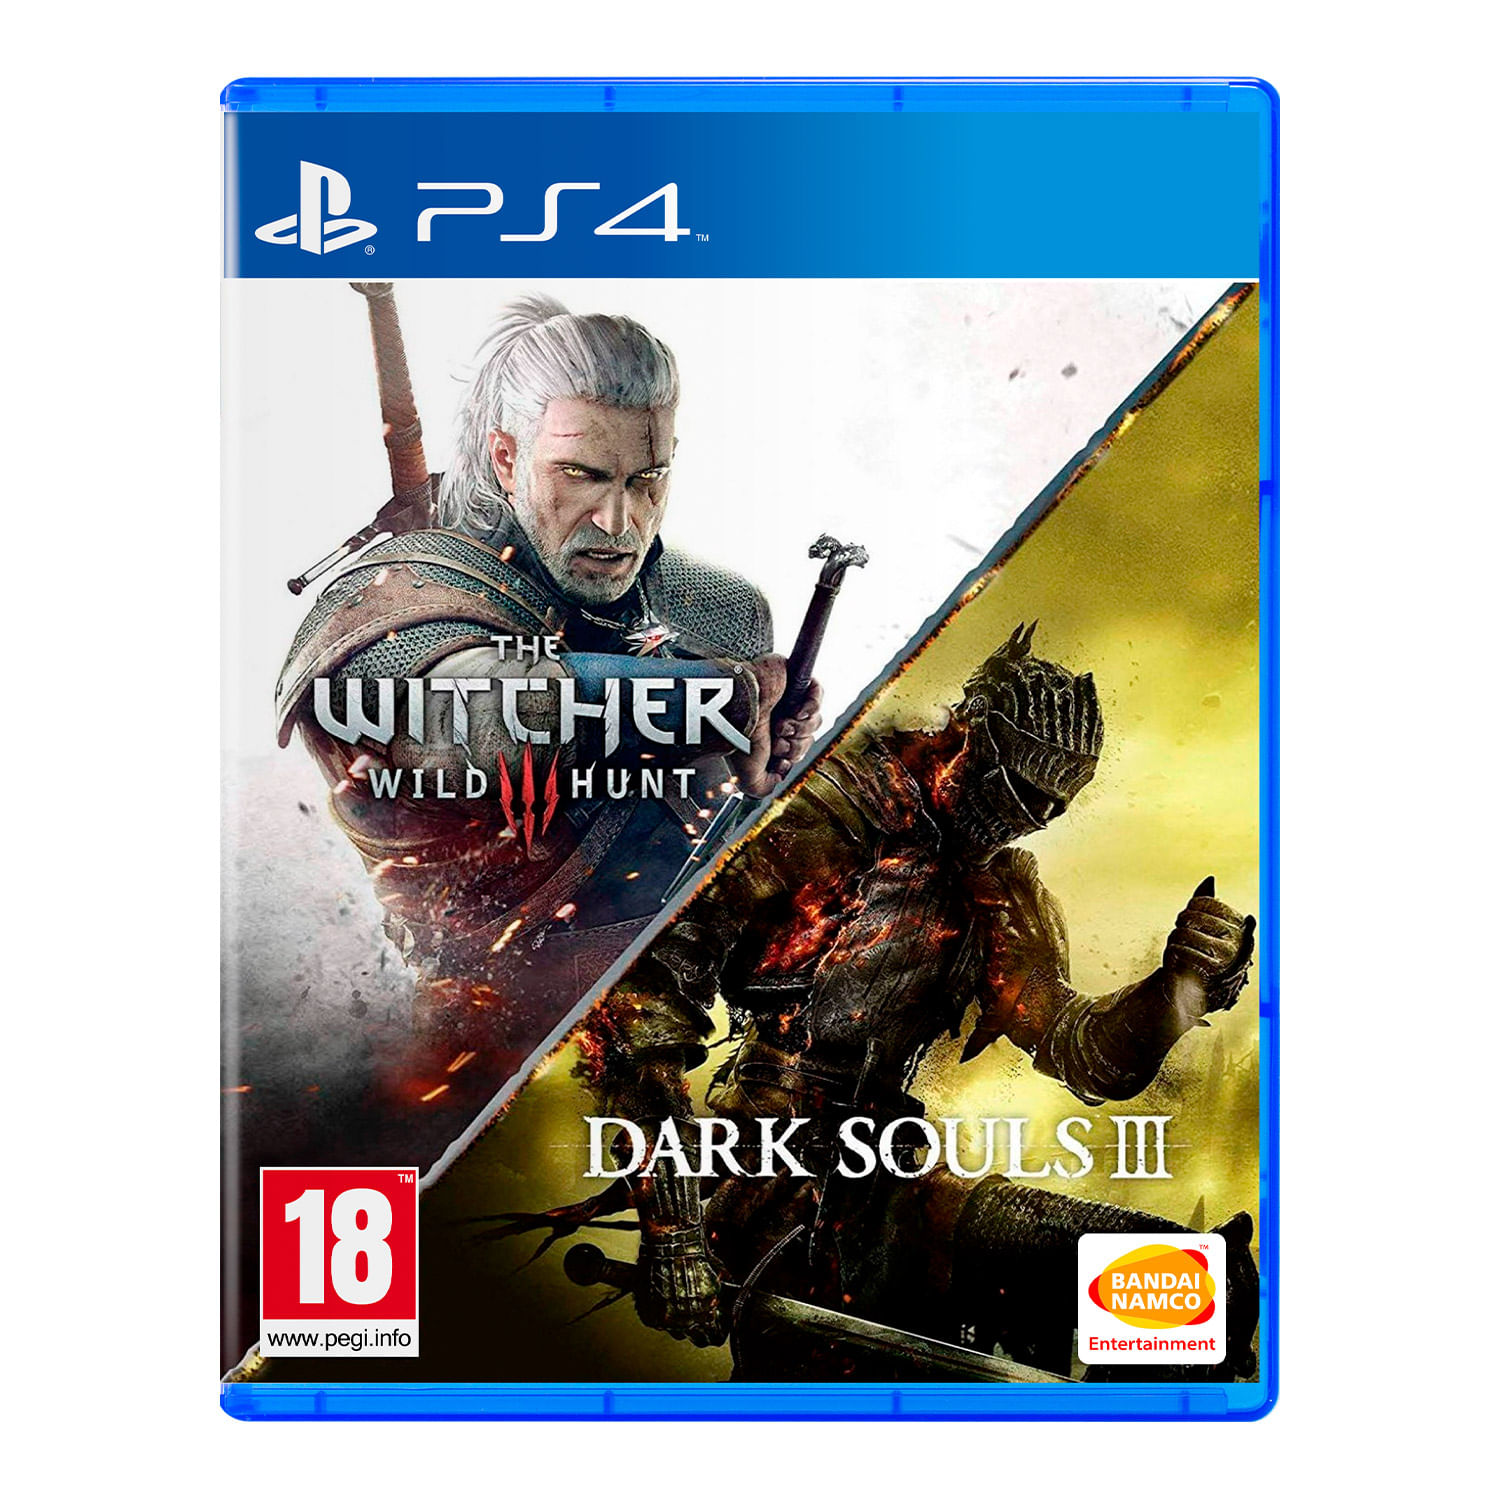 Videojuego The Witcher Wild 3:Wild Hunt +Dark Souls Iii Playstation 4 Euro